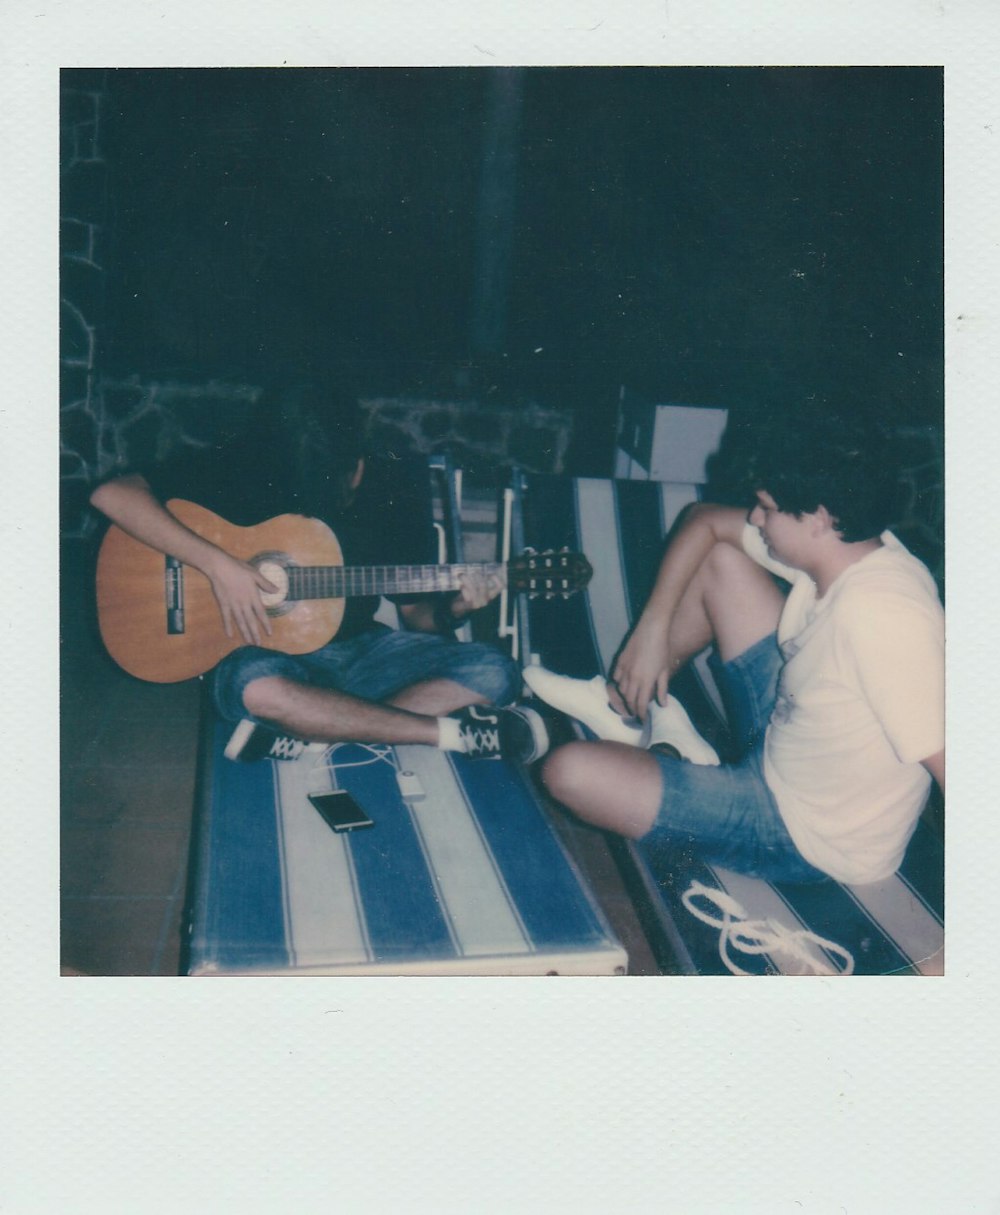 Hombre con camiseta blanca tocando la guitarra acústica